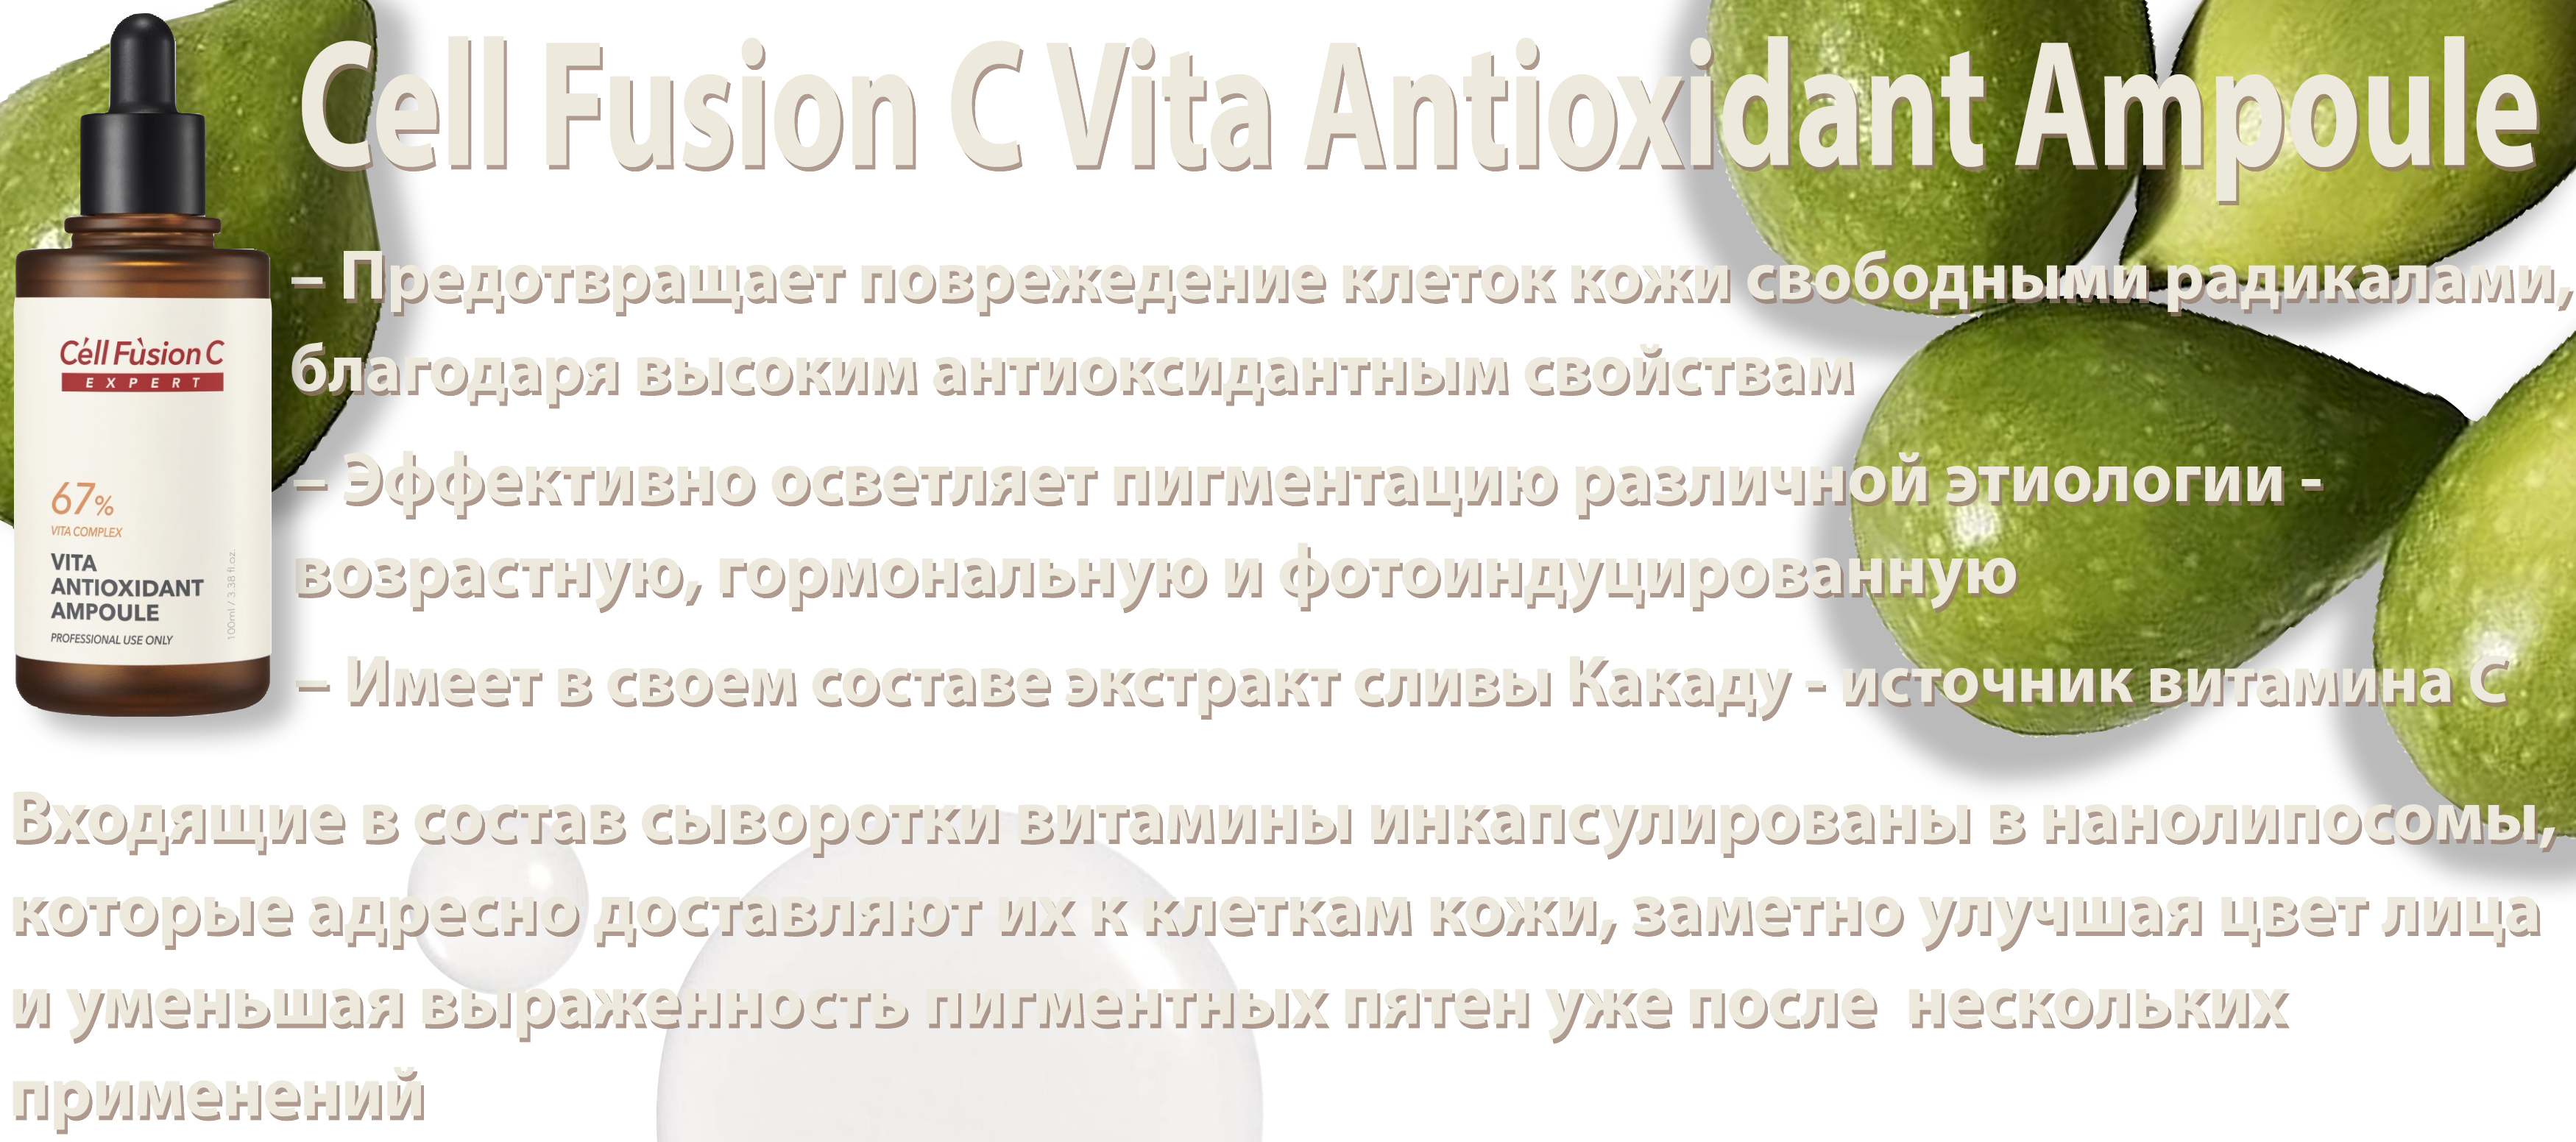 vita_antioxidant_ampoule_2_internet_magazin_Cosmogid